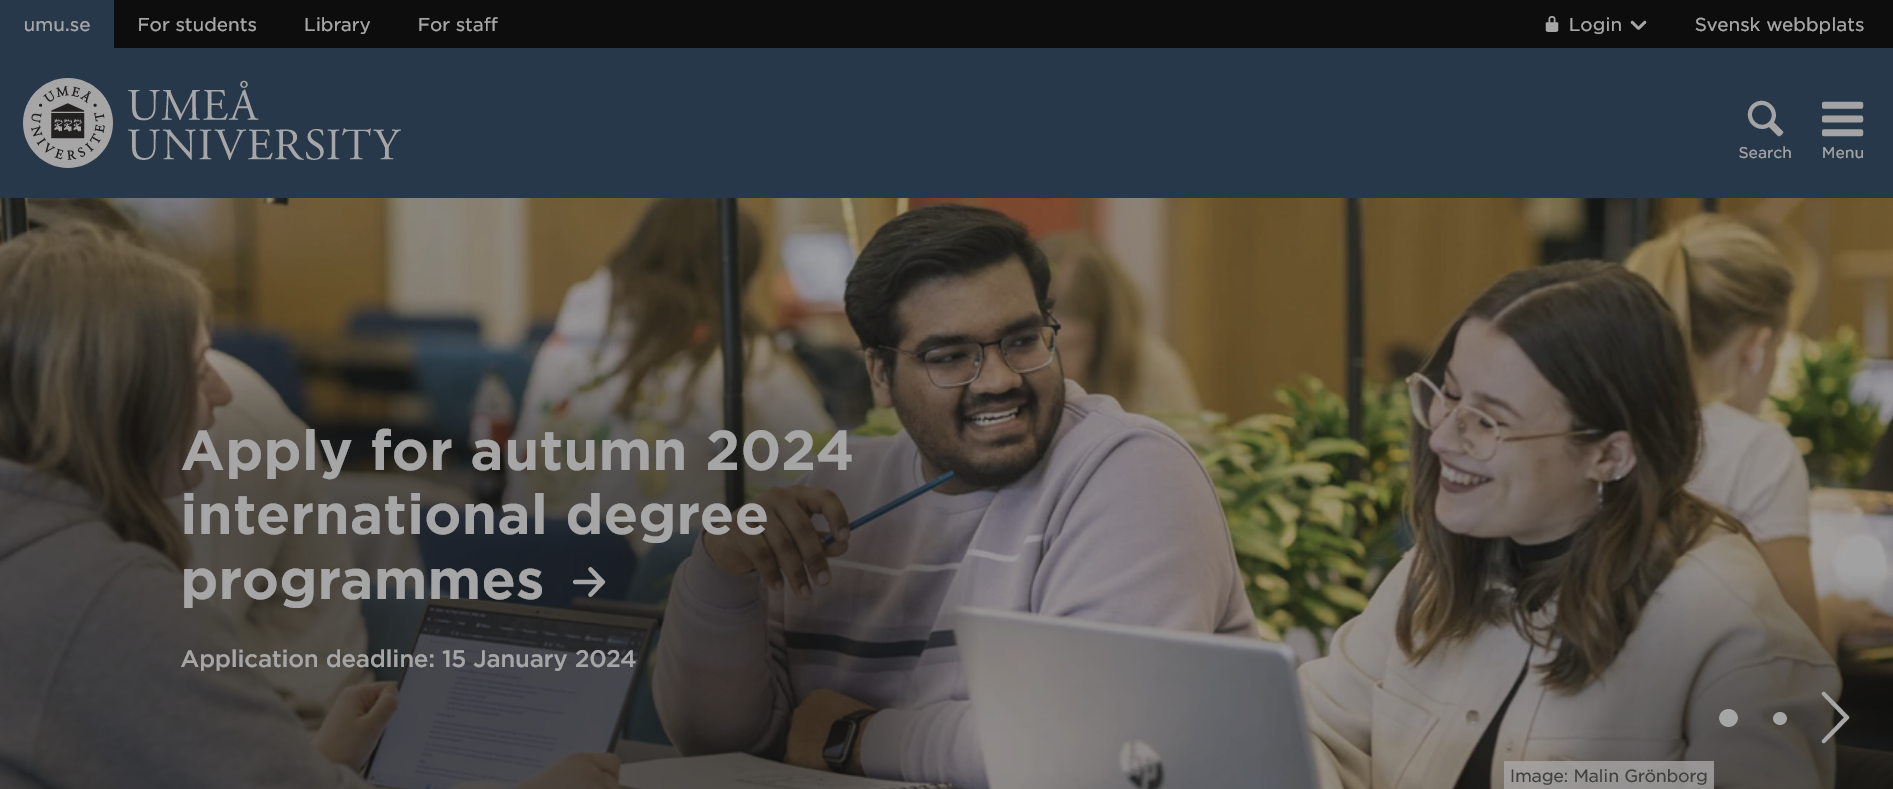 Umeå University Scholarships - International Students 2024-2025